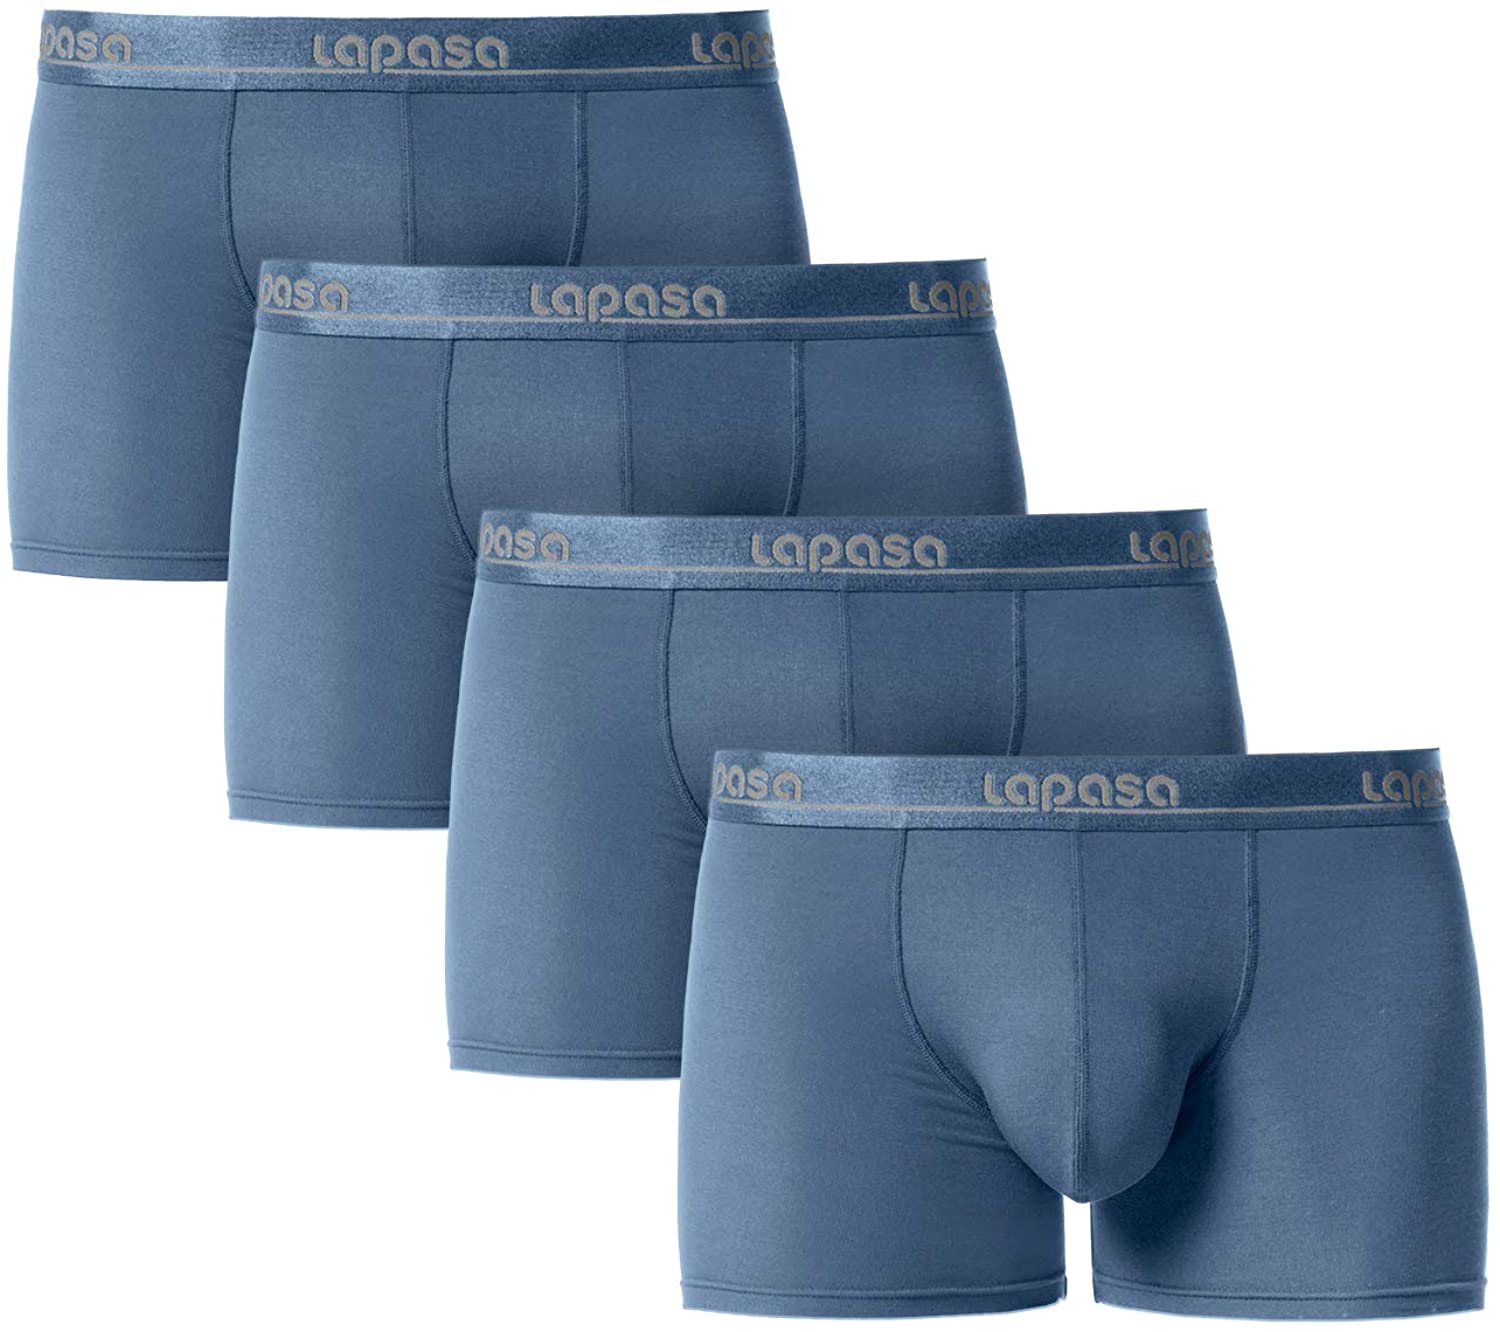 LAPASA Men's Micro Modal Boxer Briefs Bulge Pouch Trunk - Import It All